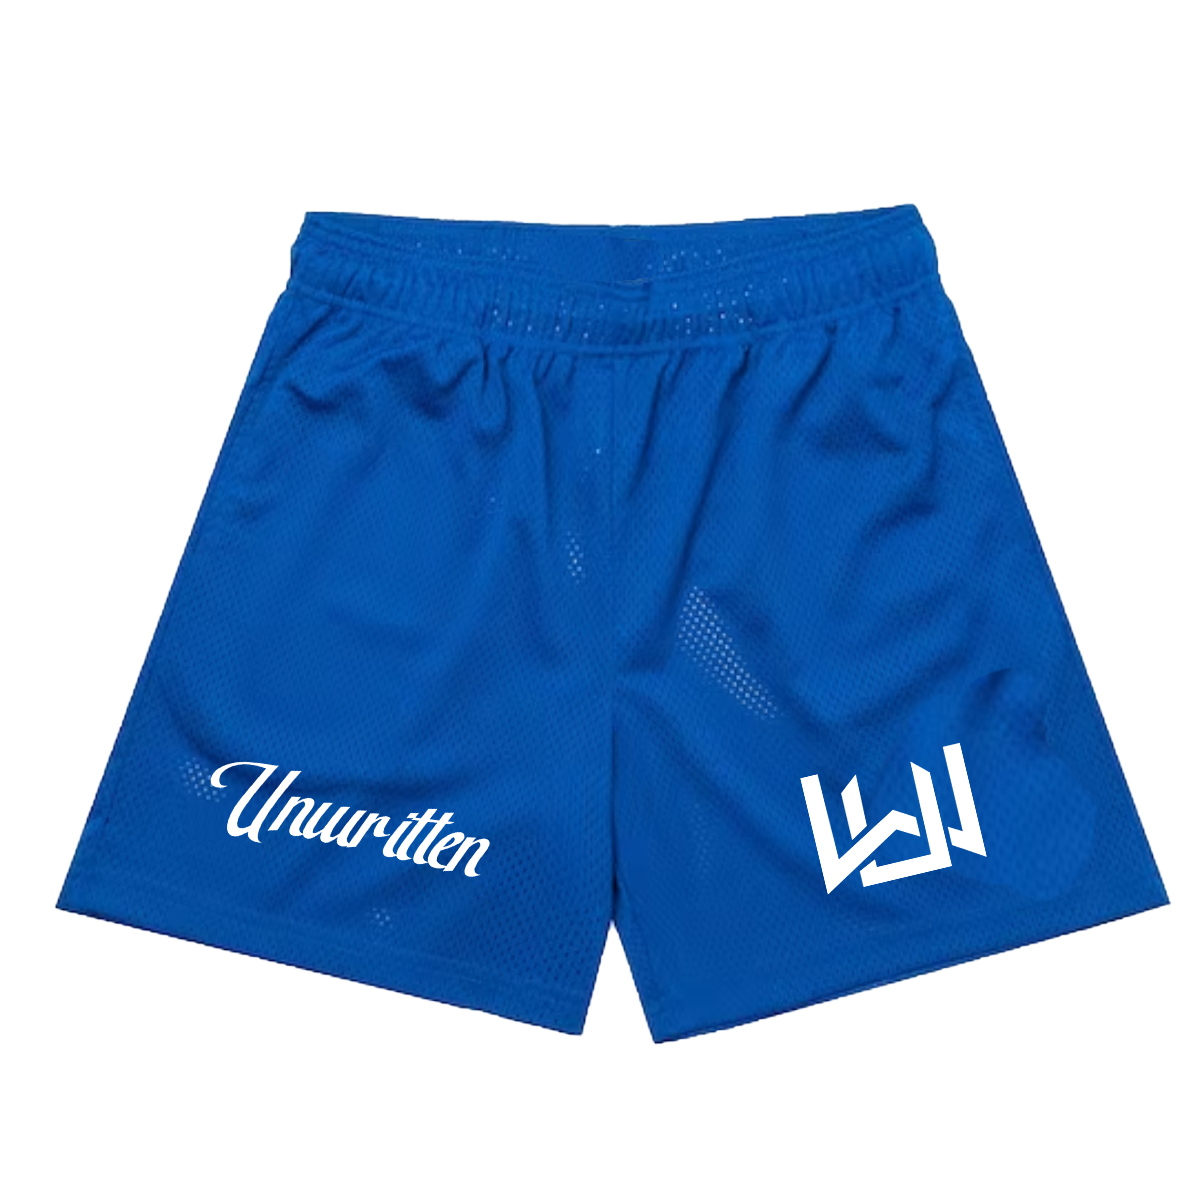 Unknown Mesh Shorts Blue/Black Design